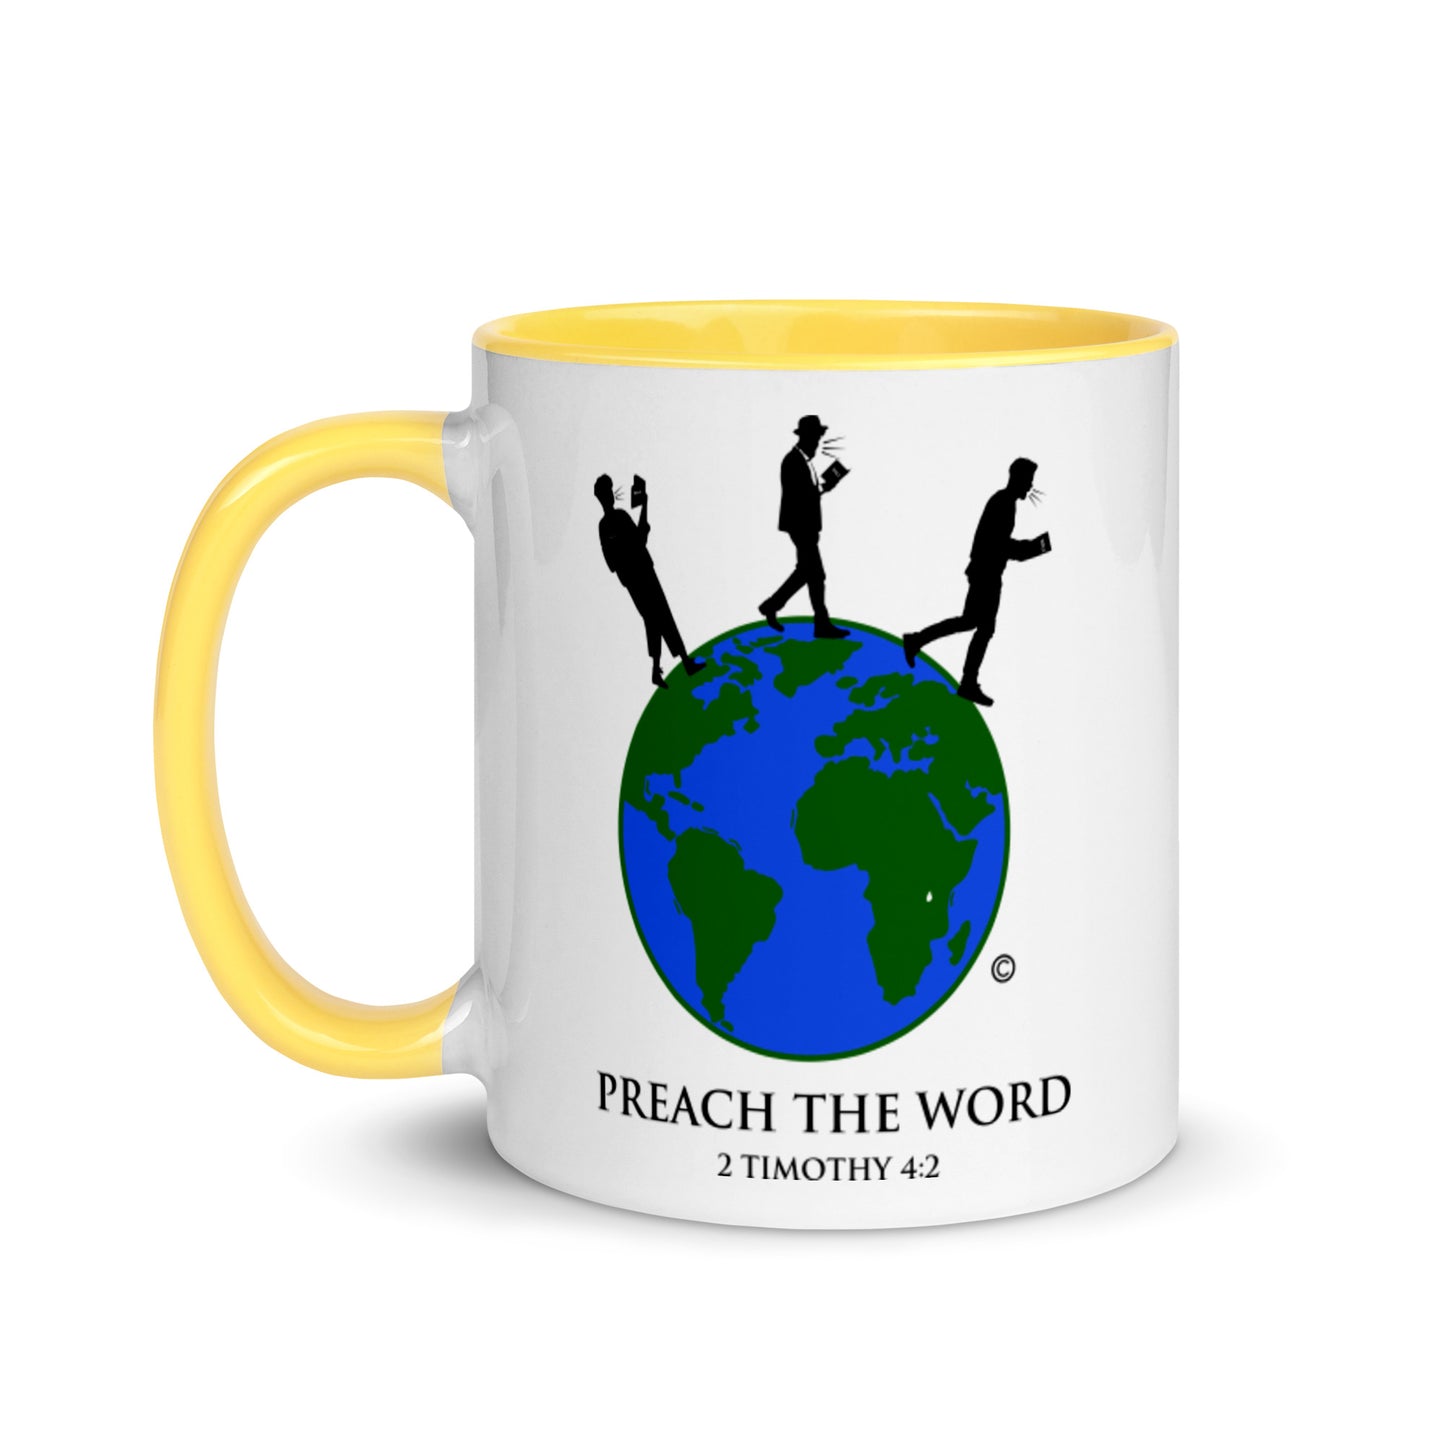 Preach the Word Mug with Color Inside